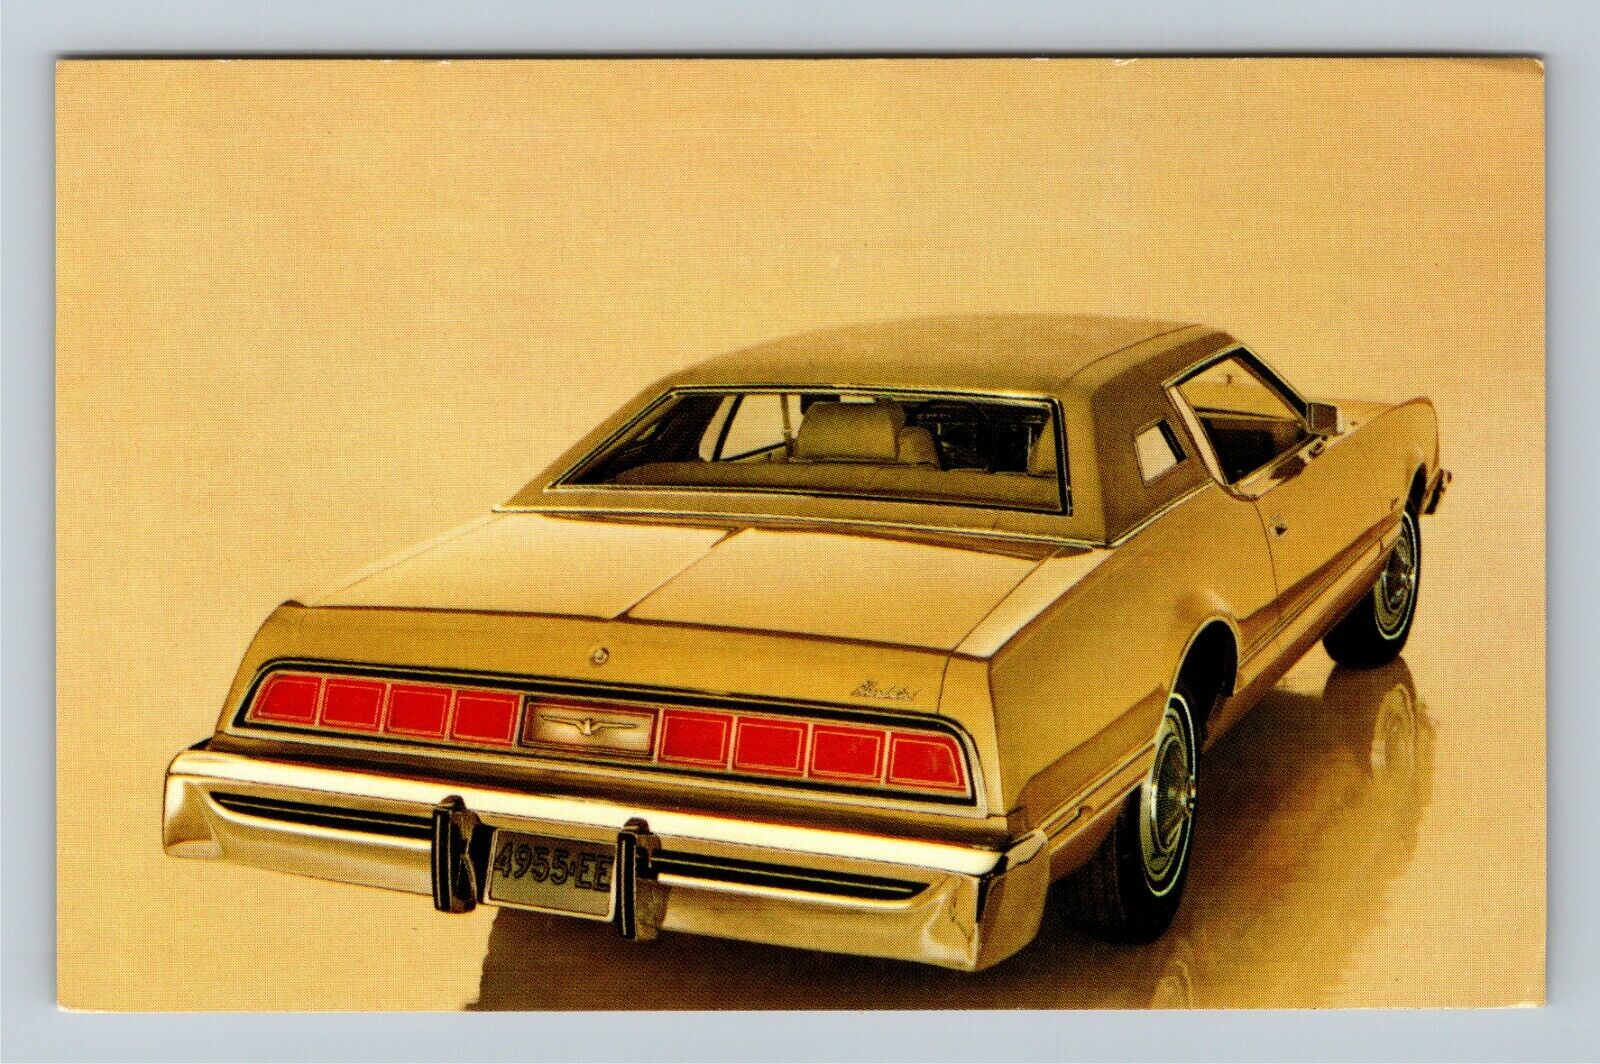 1974 Thunderbird, 2-Door Hardtop, Automobile, Vintage Postcard